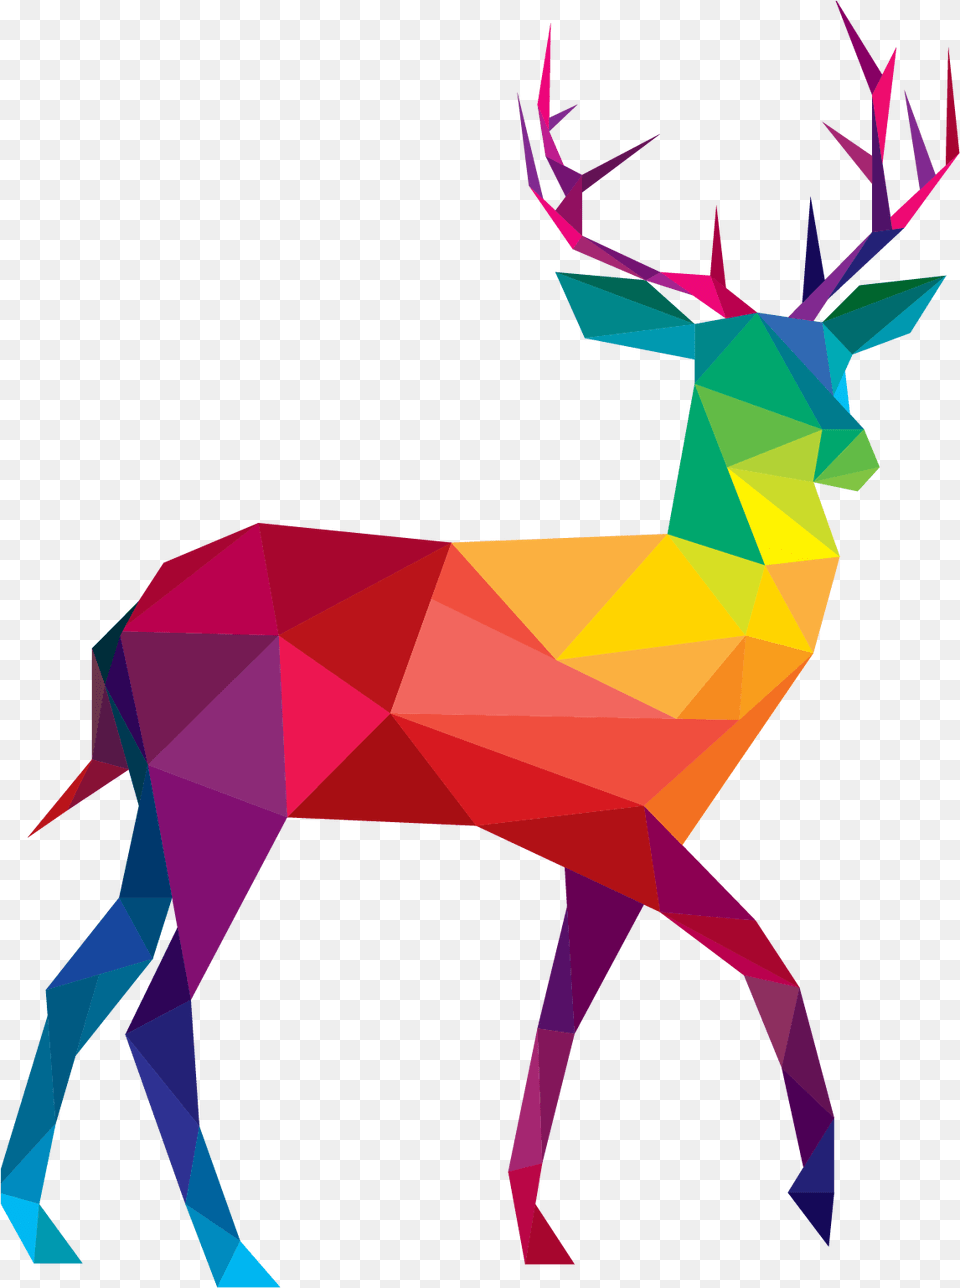 Best Osiris Shoes Ad Images In 2020 Animal Geometric Abstract Painting, Deer, Mammal, Wildlife, Elk Free Png Download